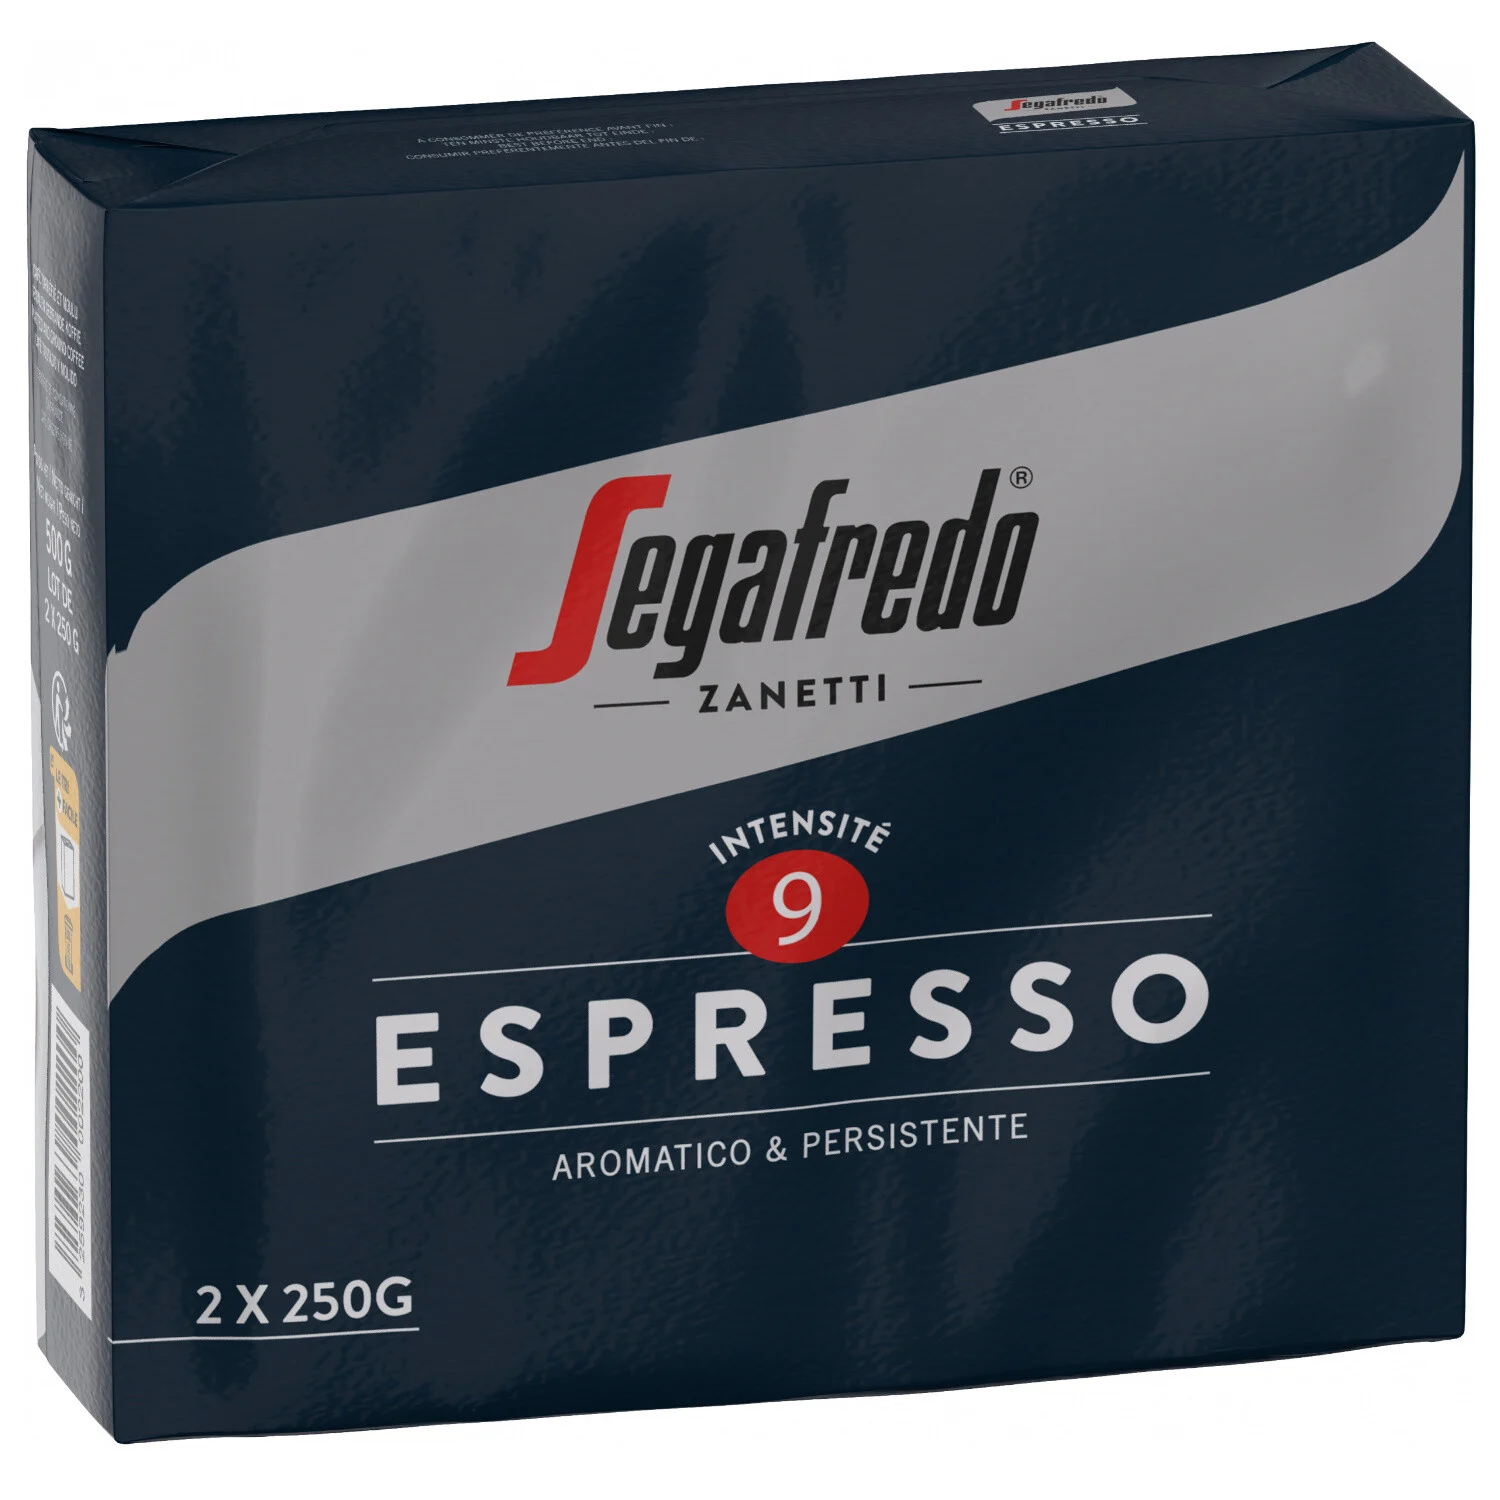 2x250g Moulu Segafredo-espresso